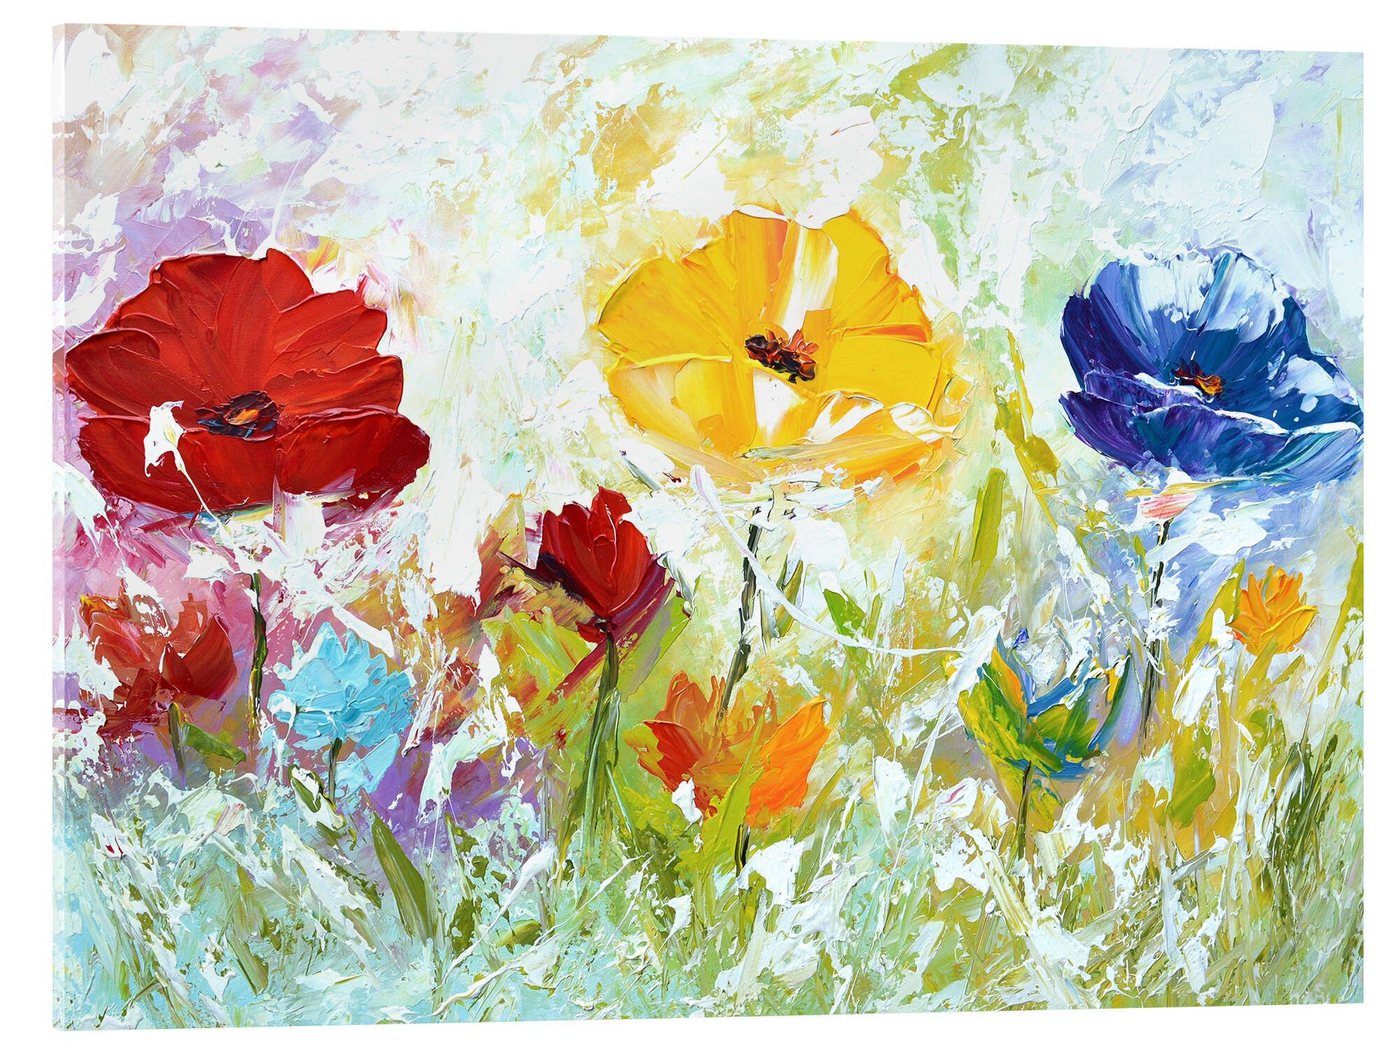 Posterlounge Acrylglasbild Theheartofart Gena, Drei abstrakte Blumen, Malerei von Posterlounge